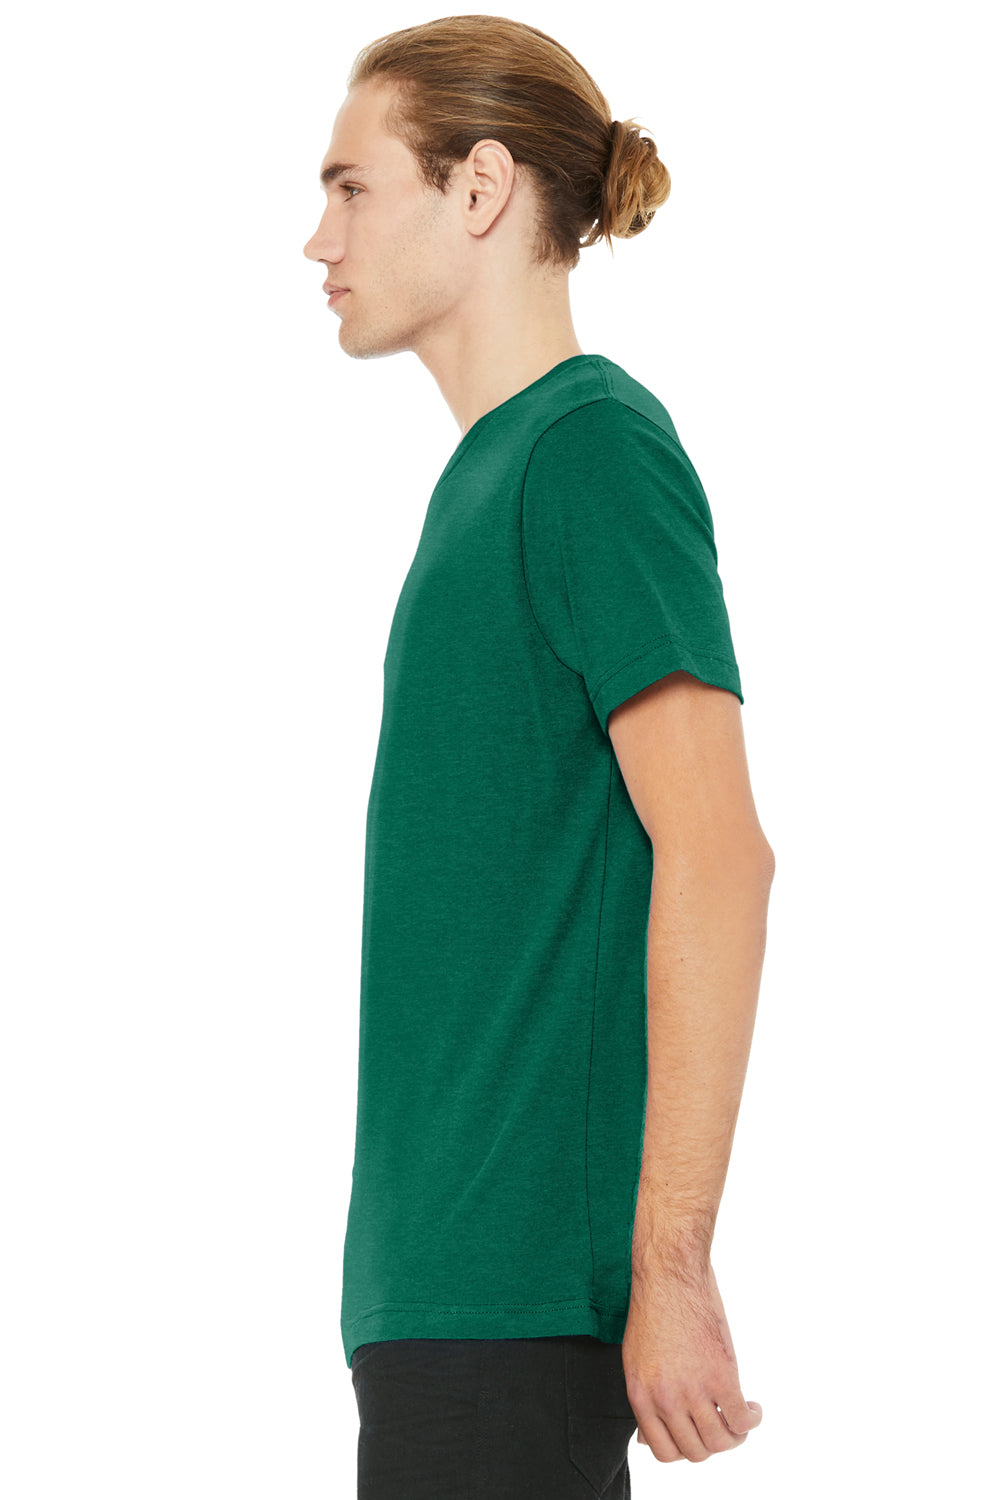 Bella + Canvas BC3005CVC Mens CVC Short Sleeve V-Neck T-Shirt Heather Grass Green Model Side